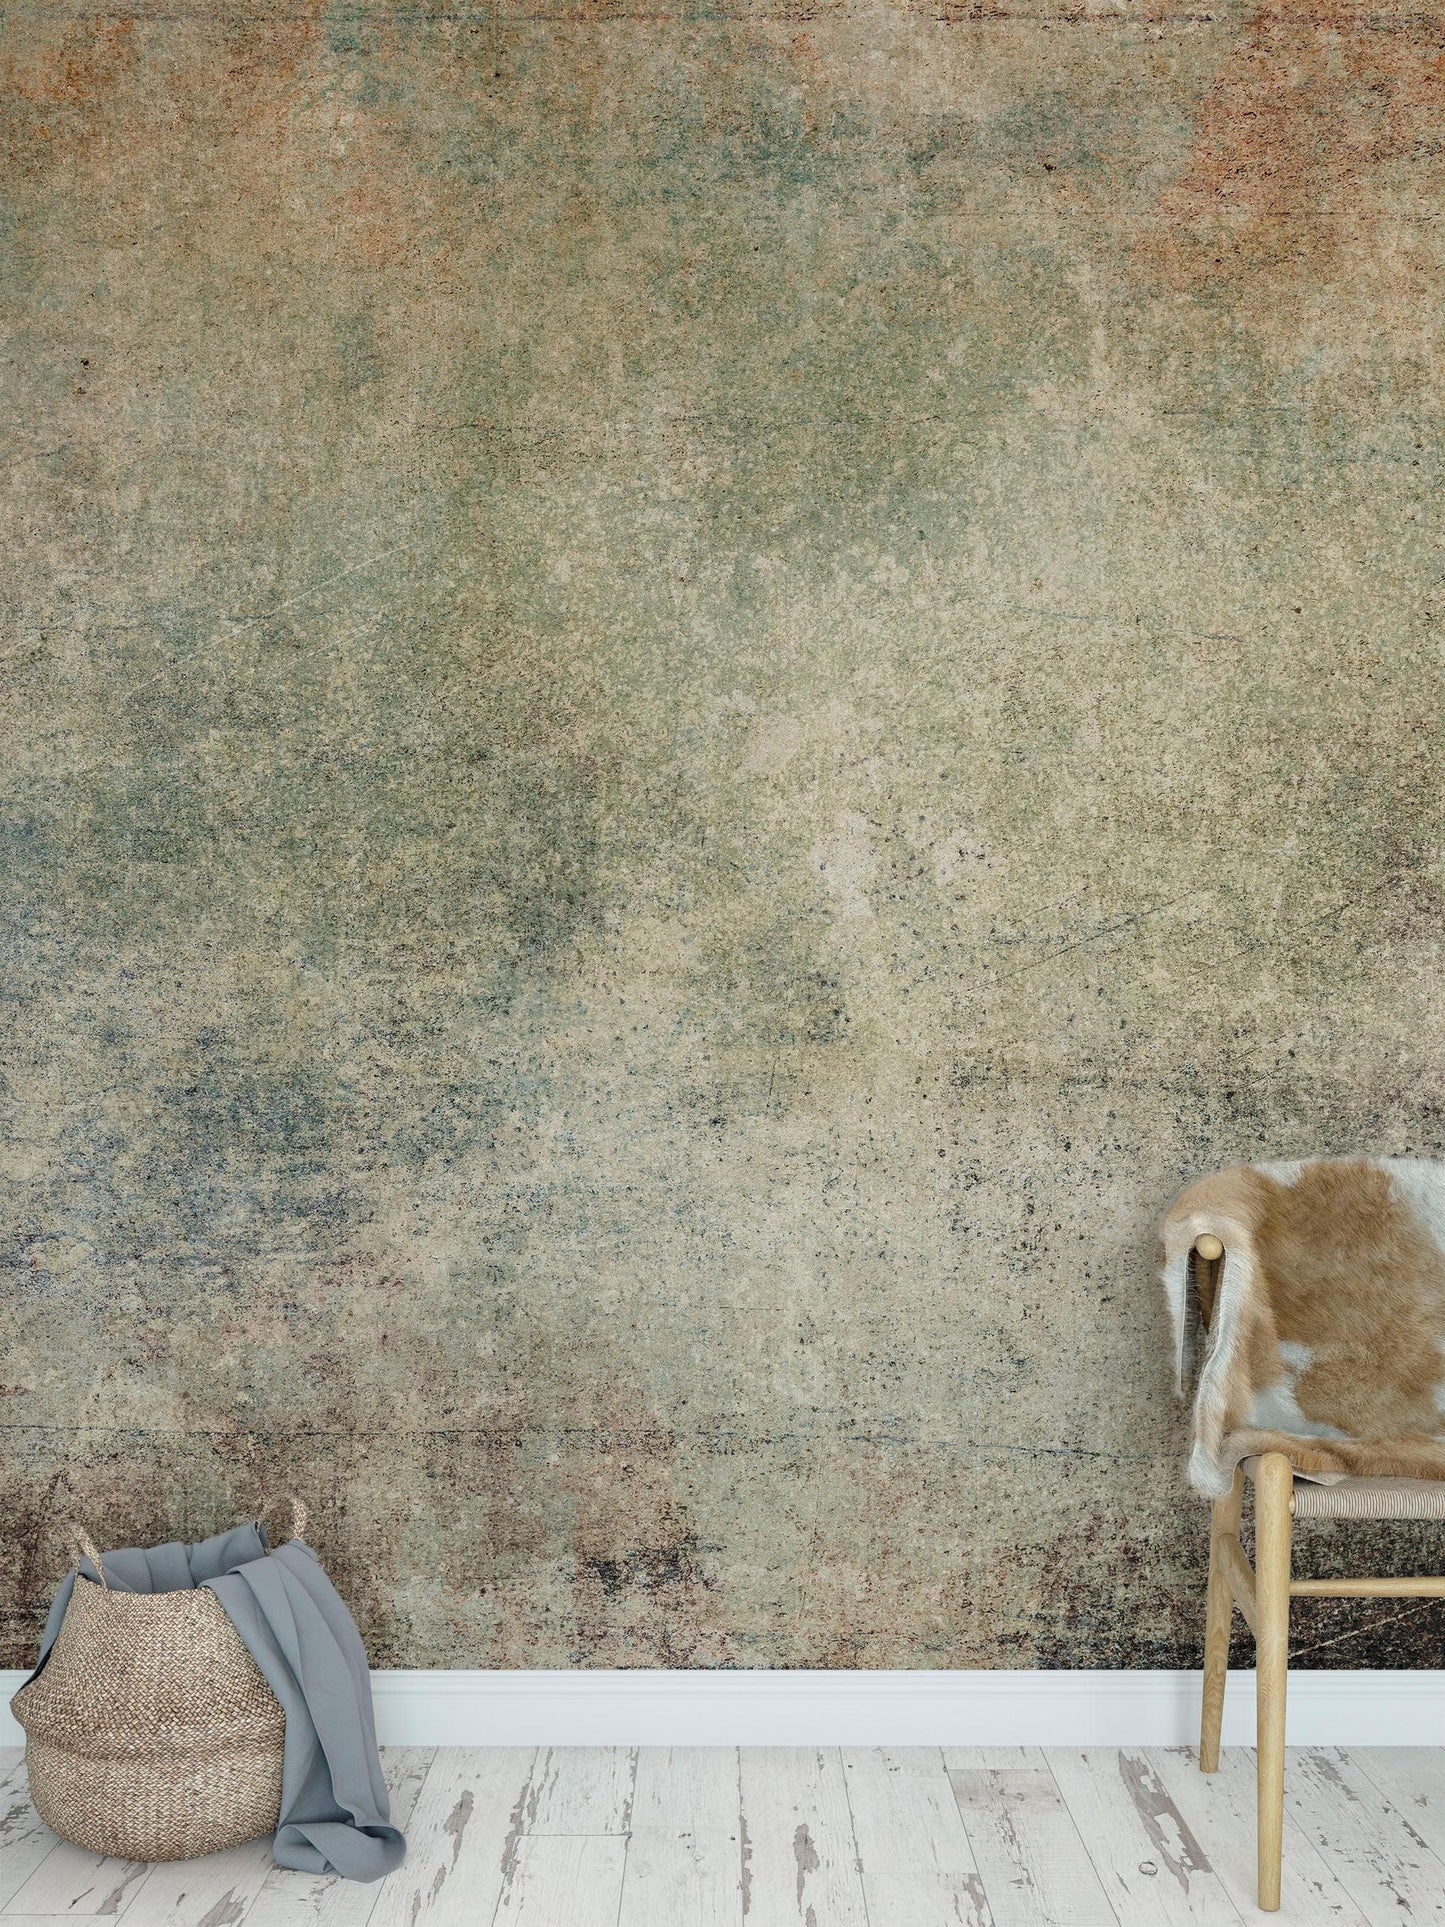 Rustic Concrete Wallpaper Wall Decor. Modern Minimalistic Self Adhesive Peel and Stick Wall Mural. #6367